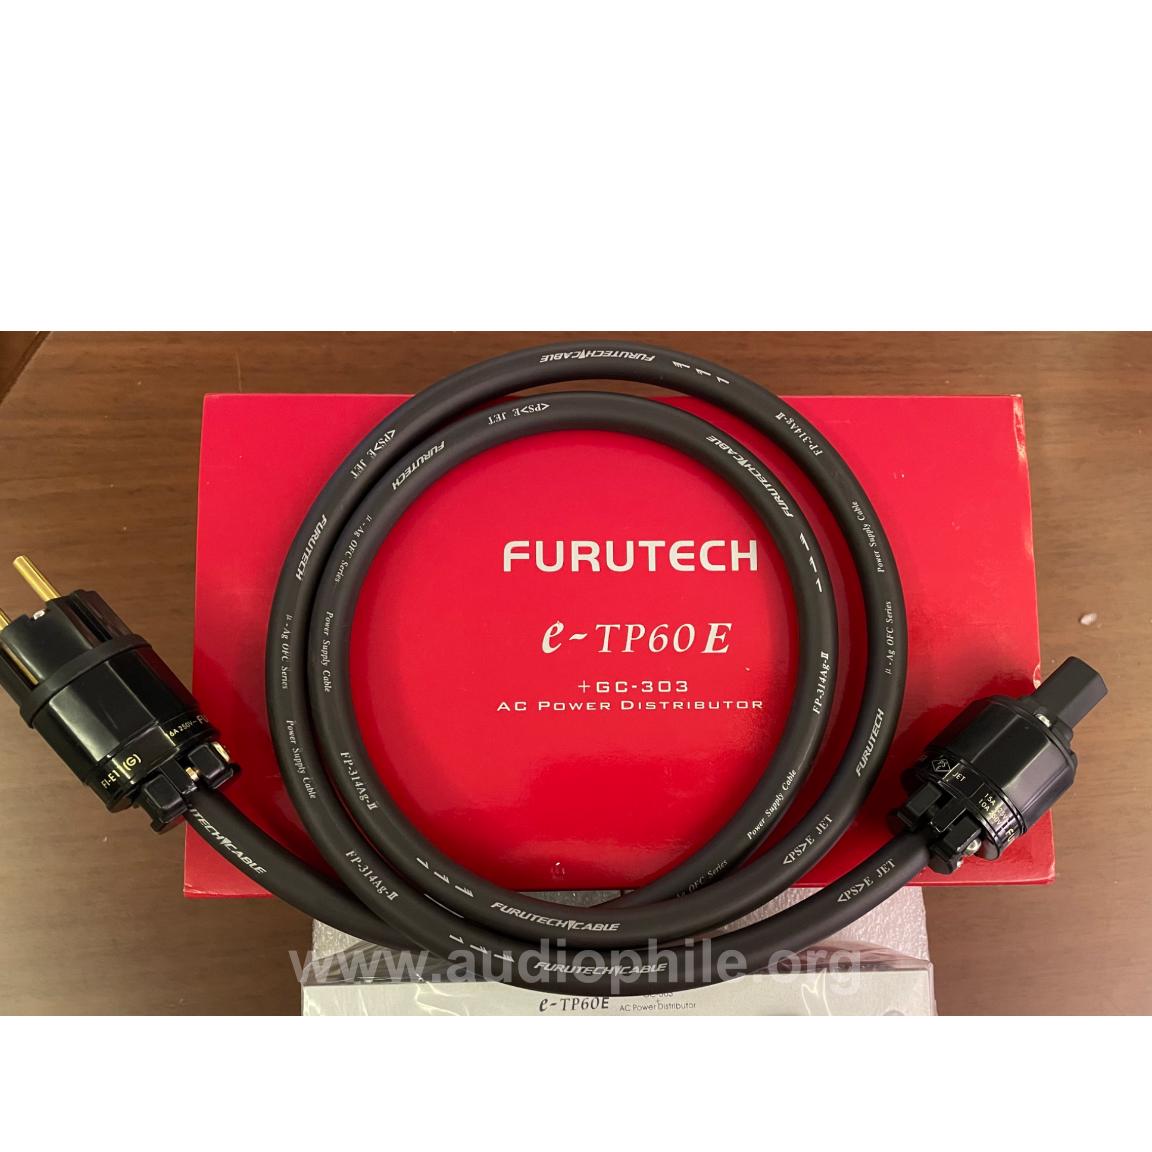 Furutech etp60 + furutech 314agıı